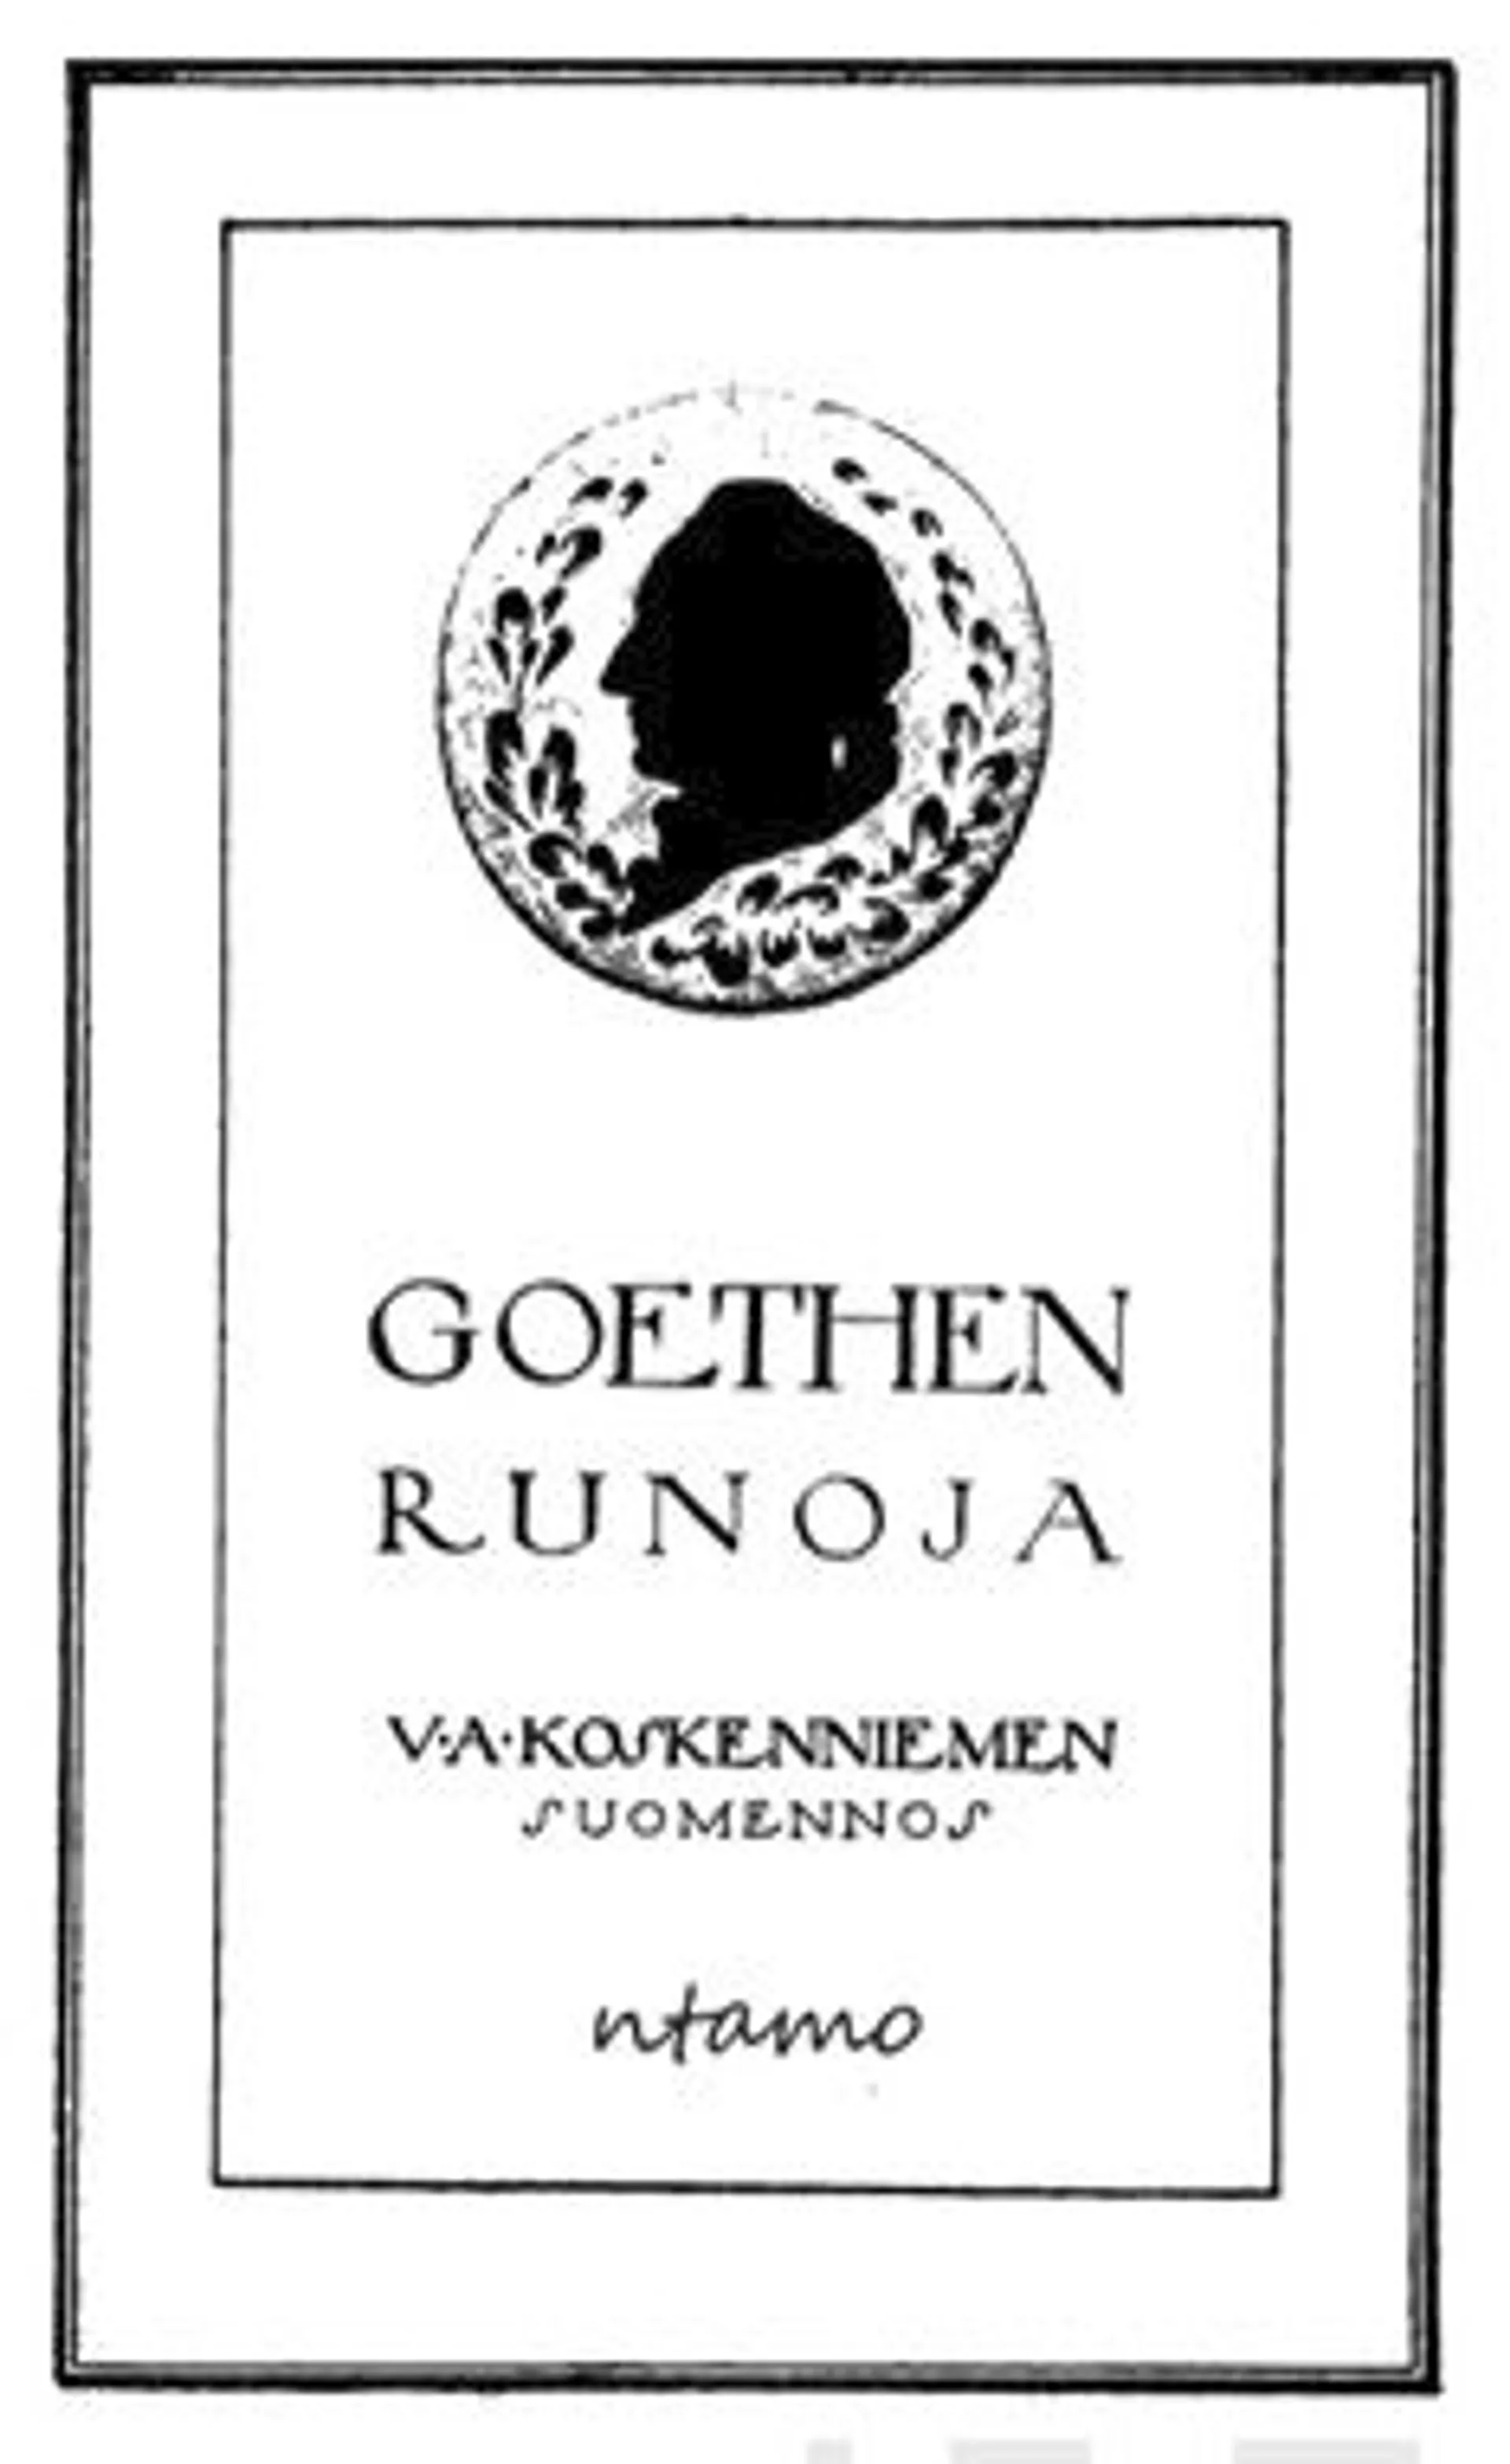 Goethe, Goethen runoja